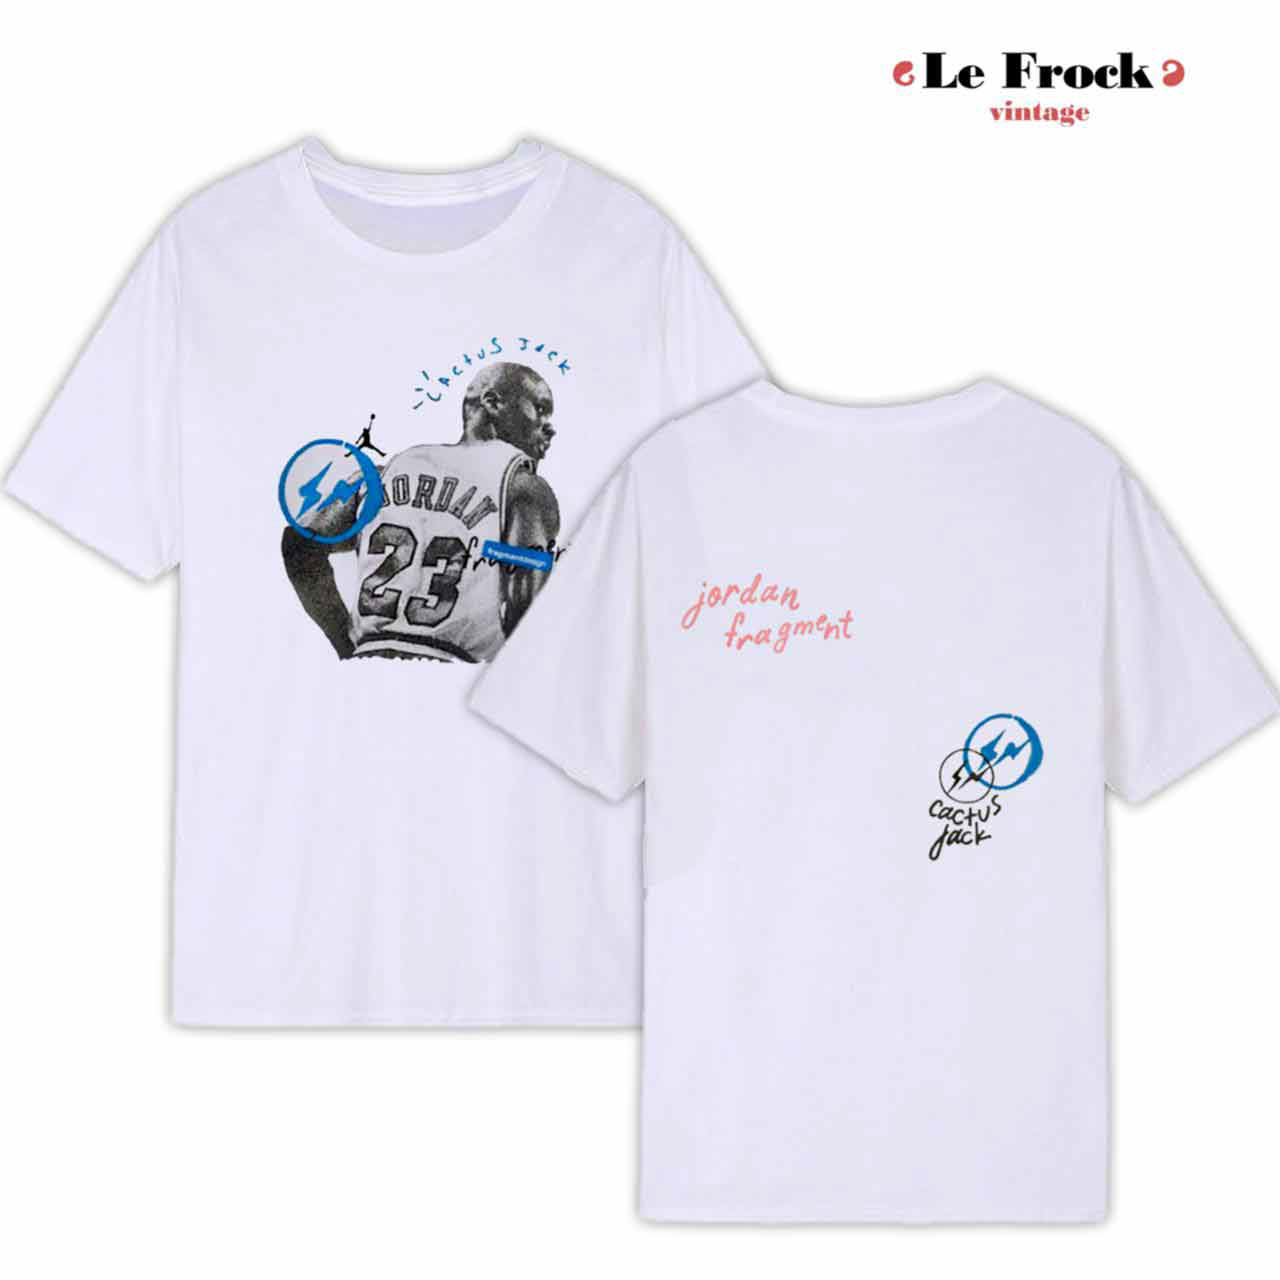 Travis Scott x Jordan x Fragment White T-Shirt - Travis Scott Merch